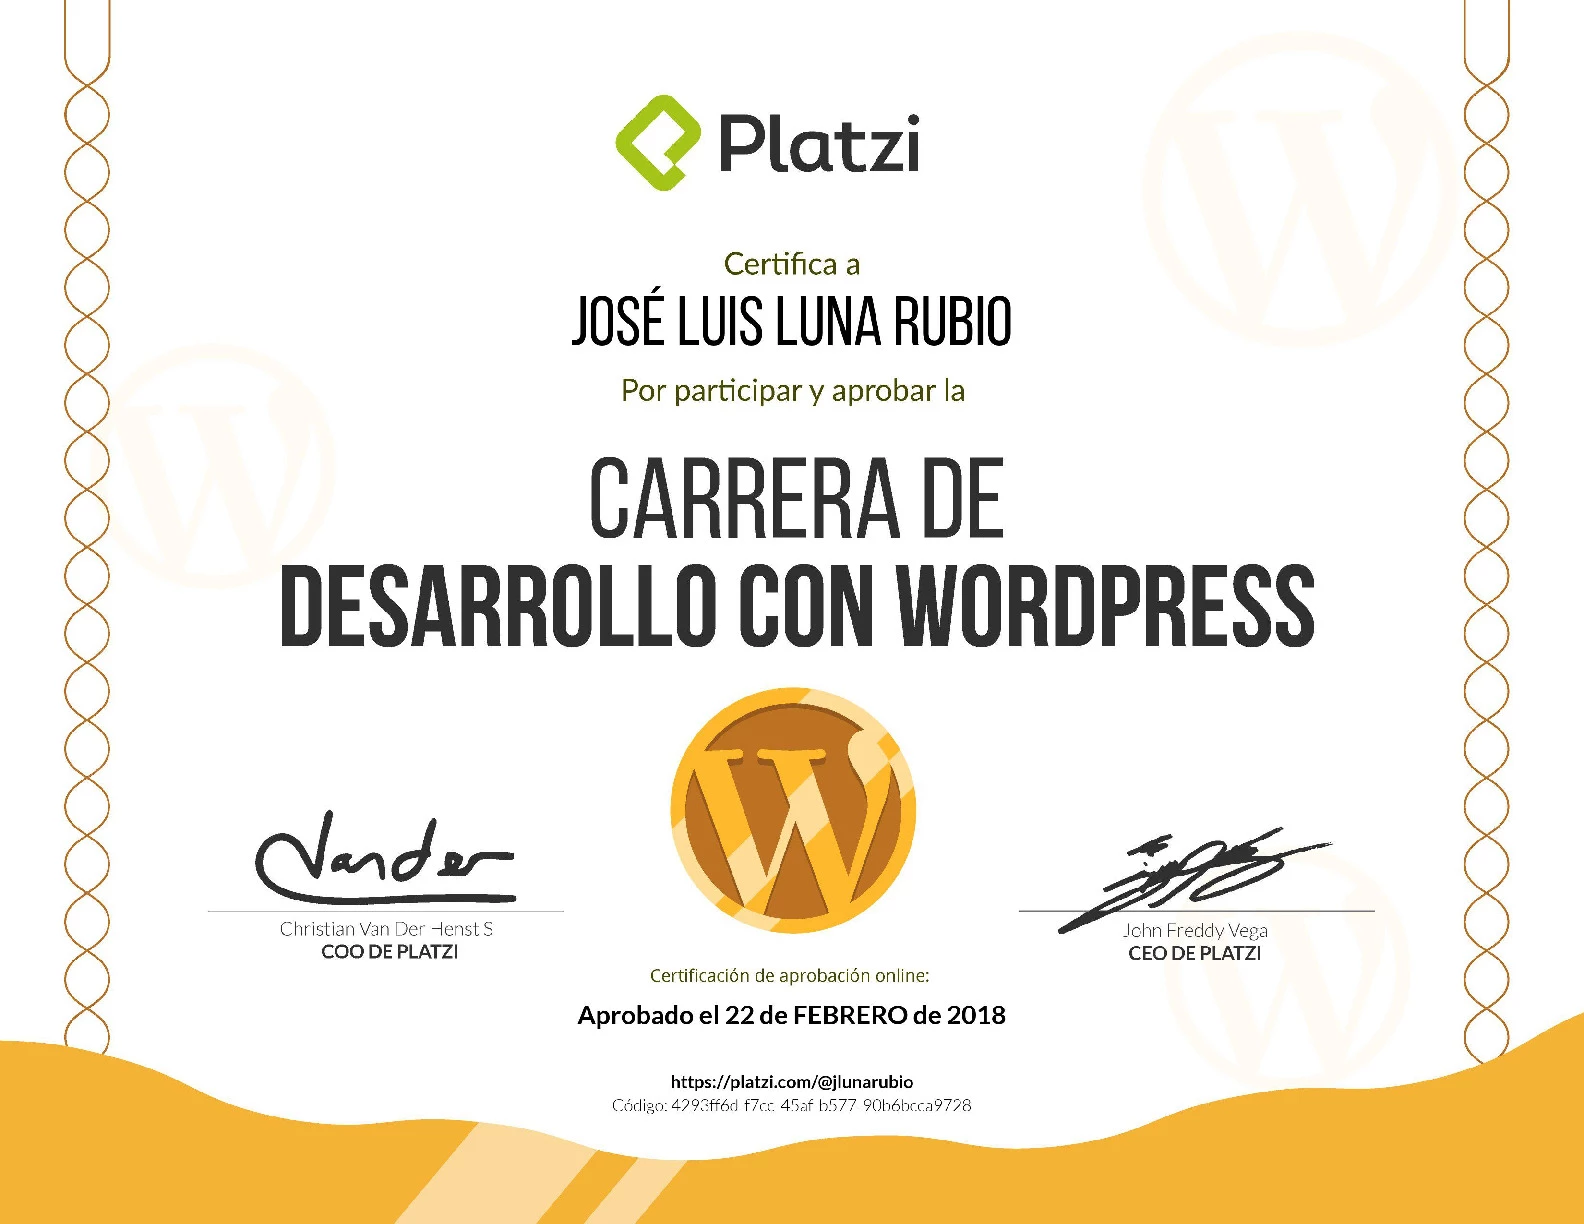 Carrera Platzi Jose Luis Luna Rubio - Desarrollo con Wordpress